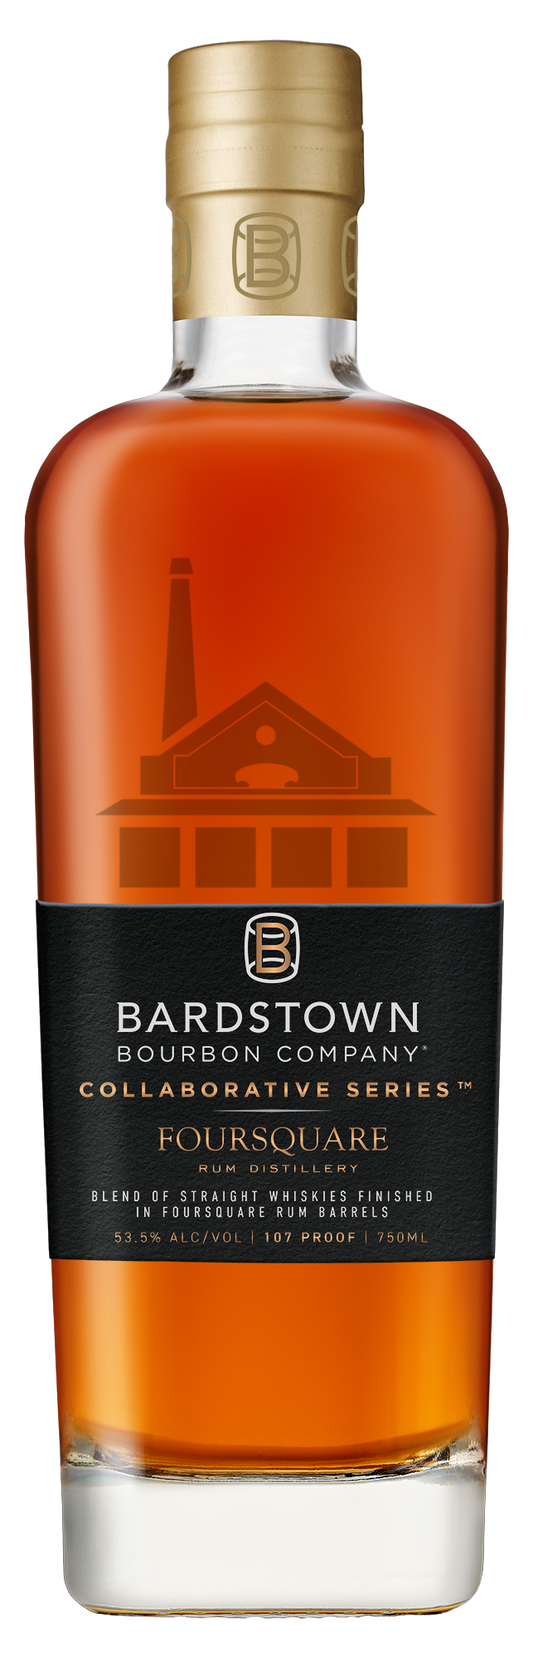 Bardstown Bourbon Co. Collaboration Series Foursquare Rum Finish (750ml)